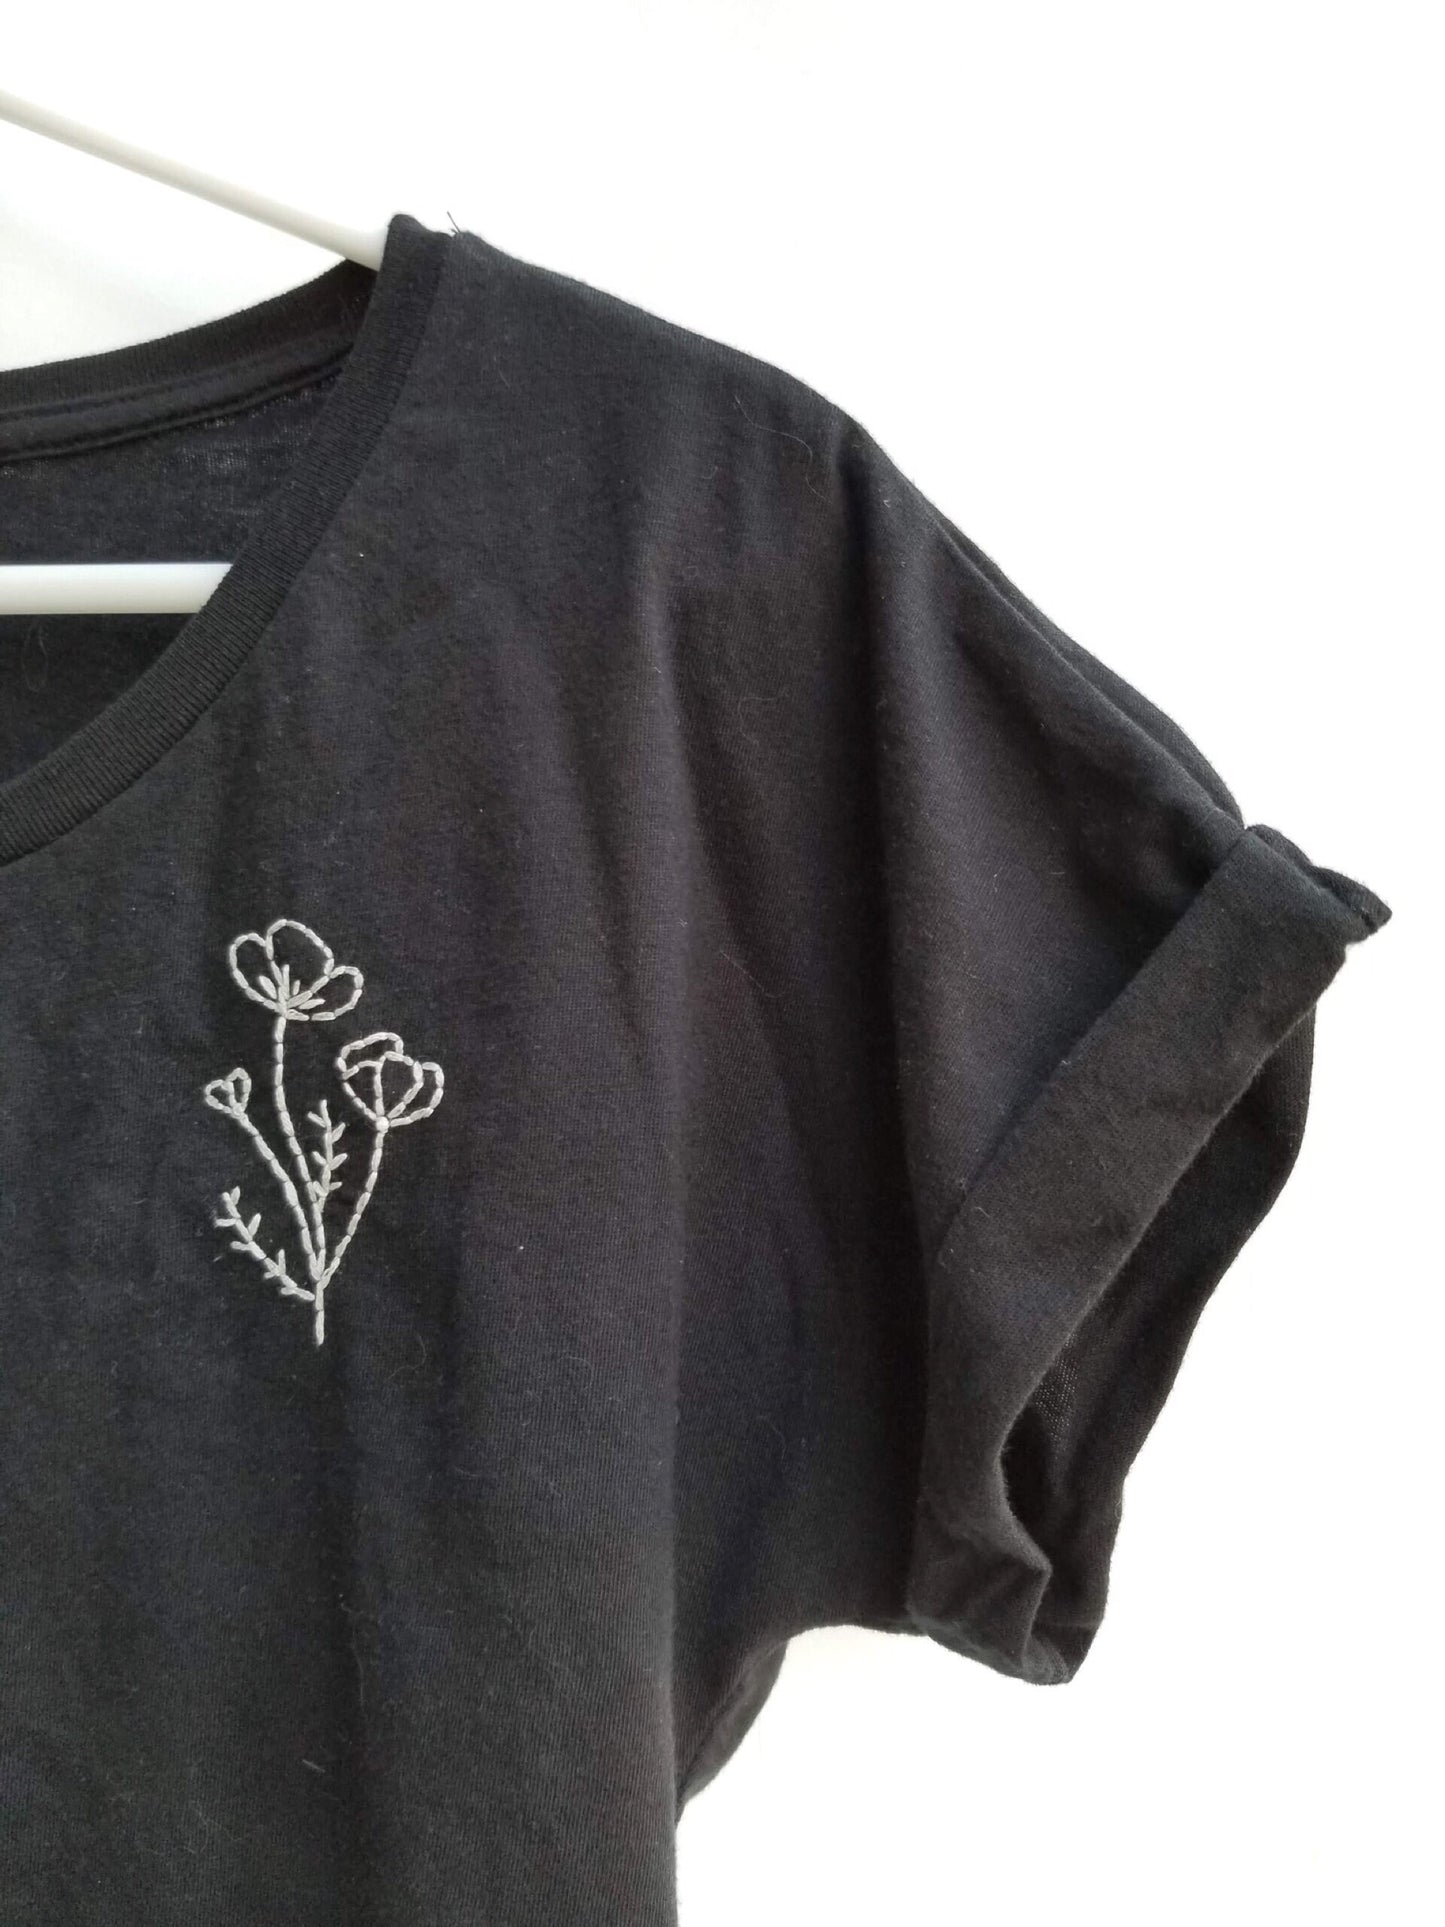 Poppies Shirt PDF Embroidery Pattern